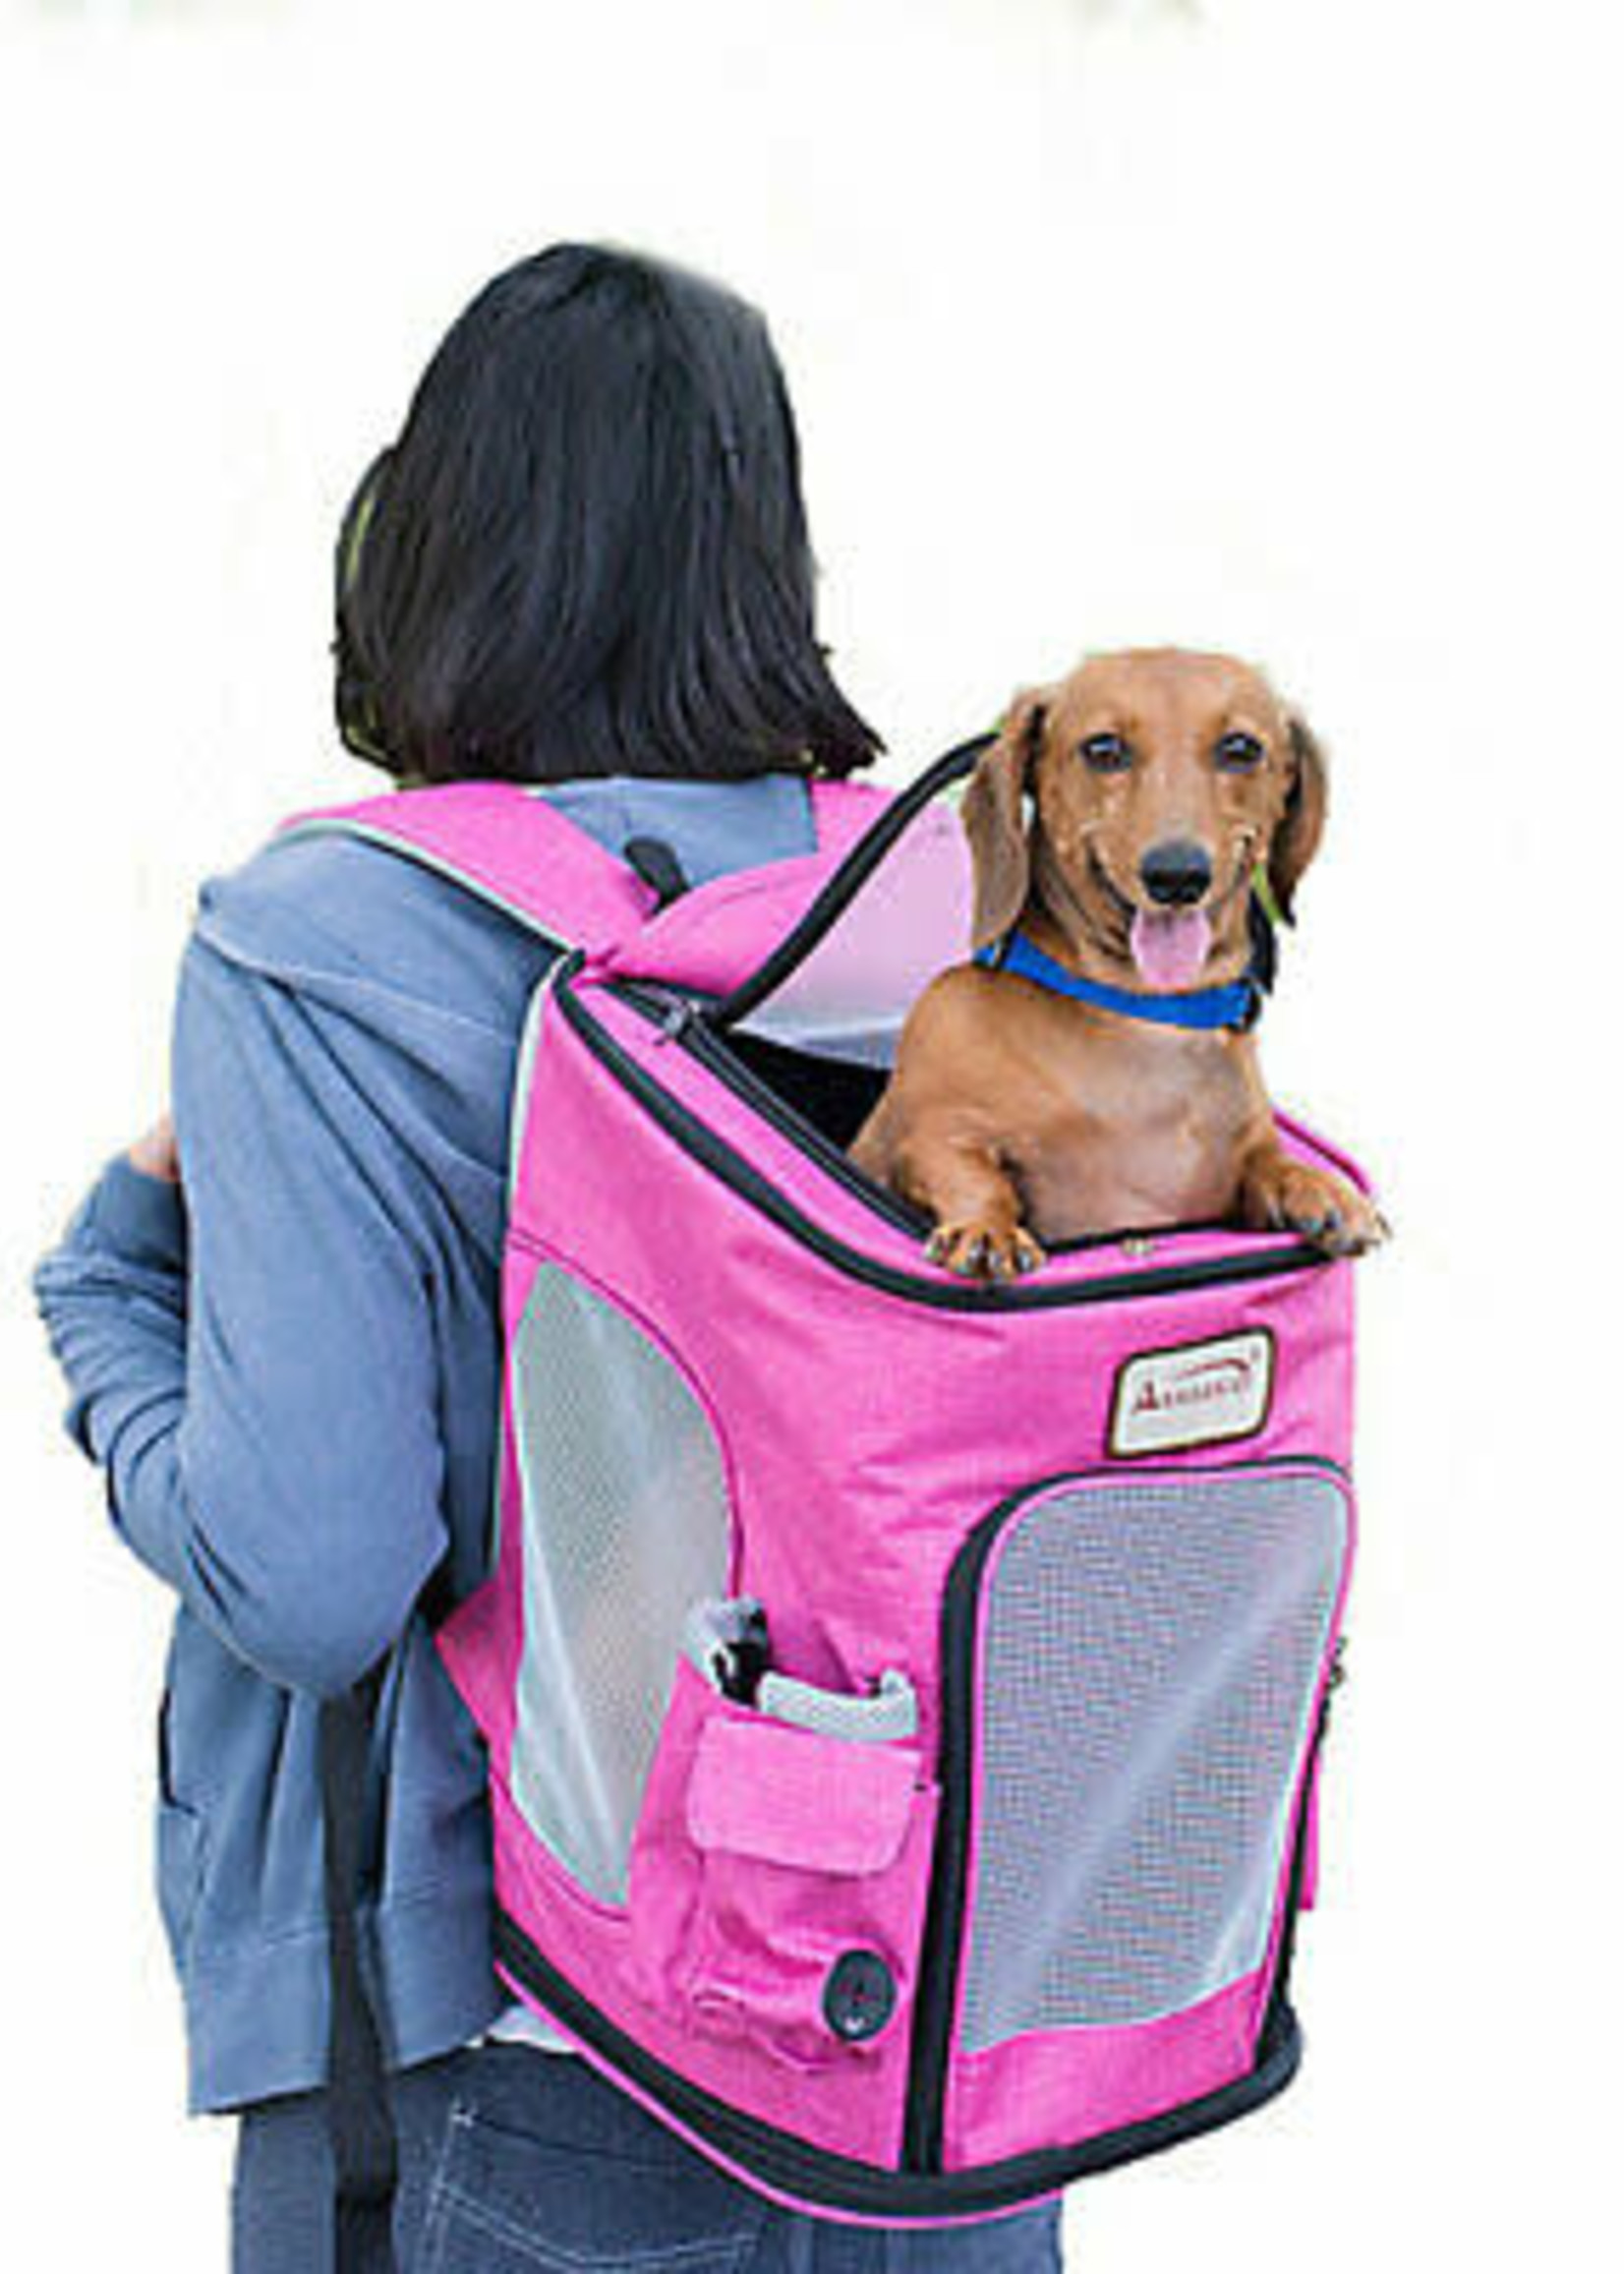 Armarkat Armarkat Pets Backpack Pet Carrier Pink/Gray